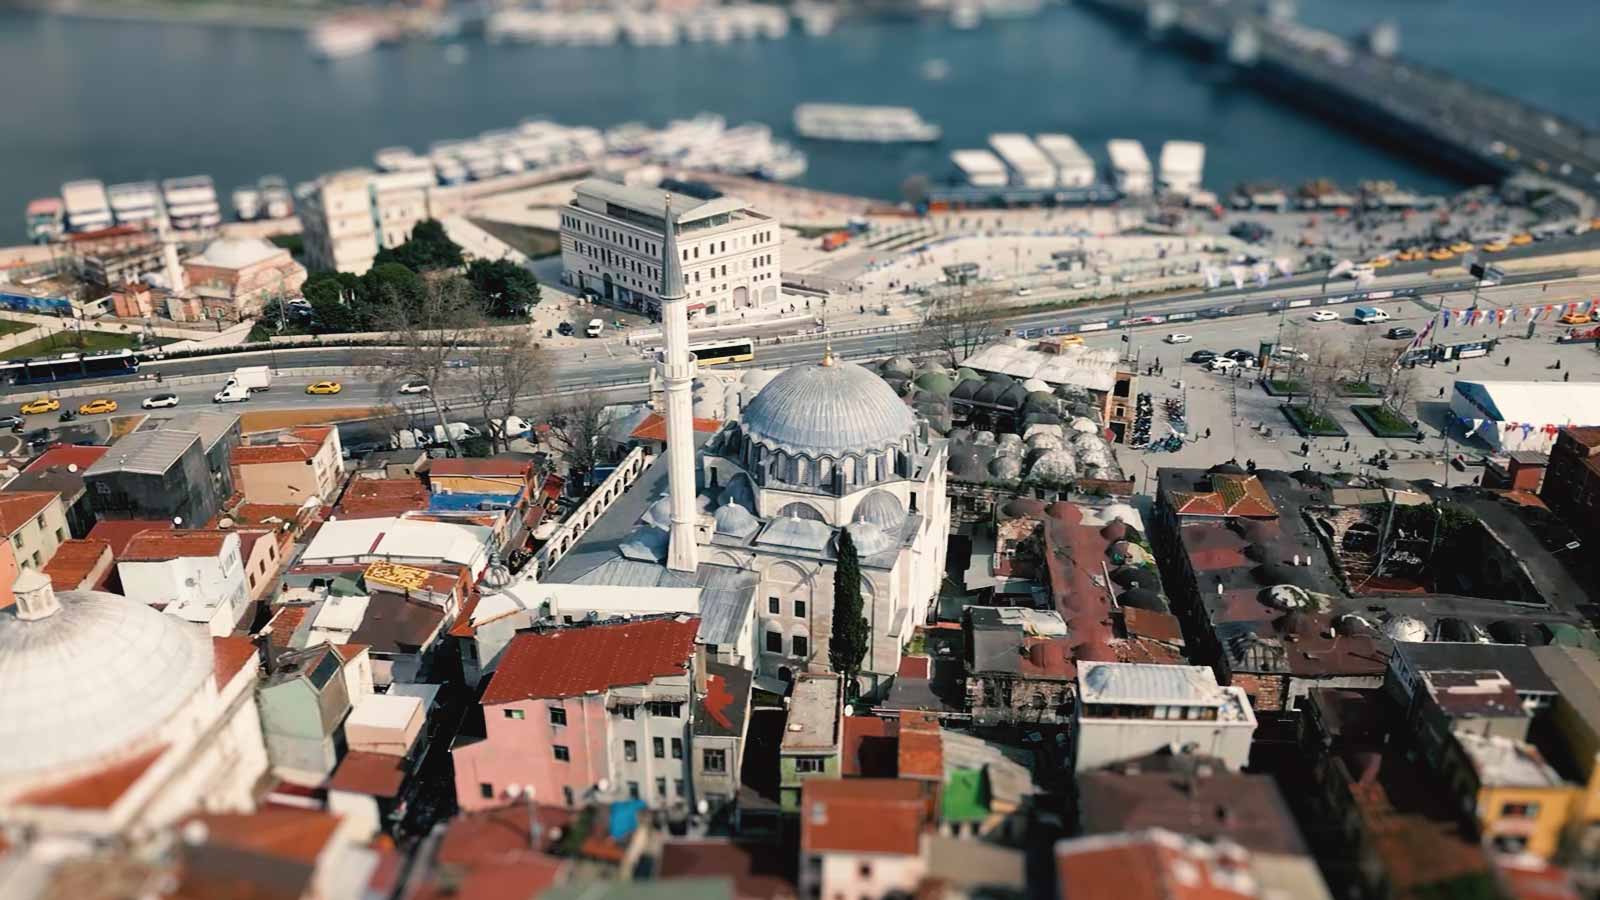 Rustem Pasa Mosque Aerial View